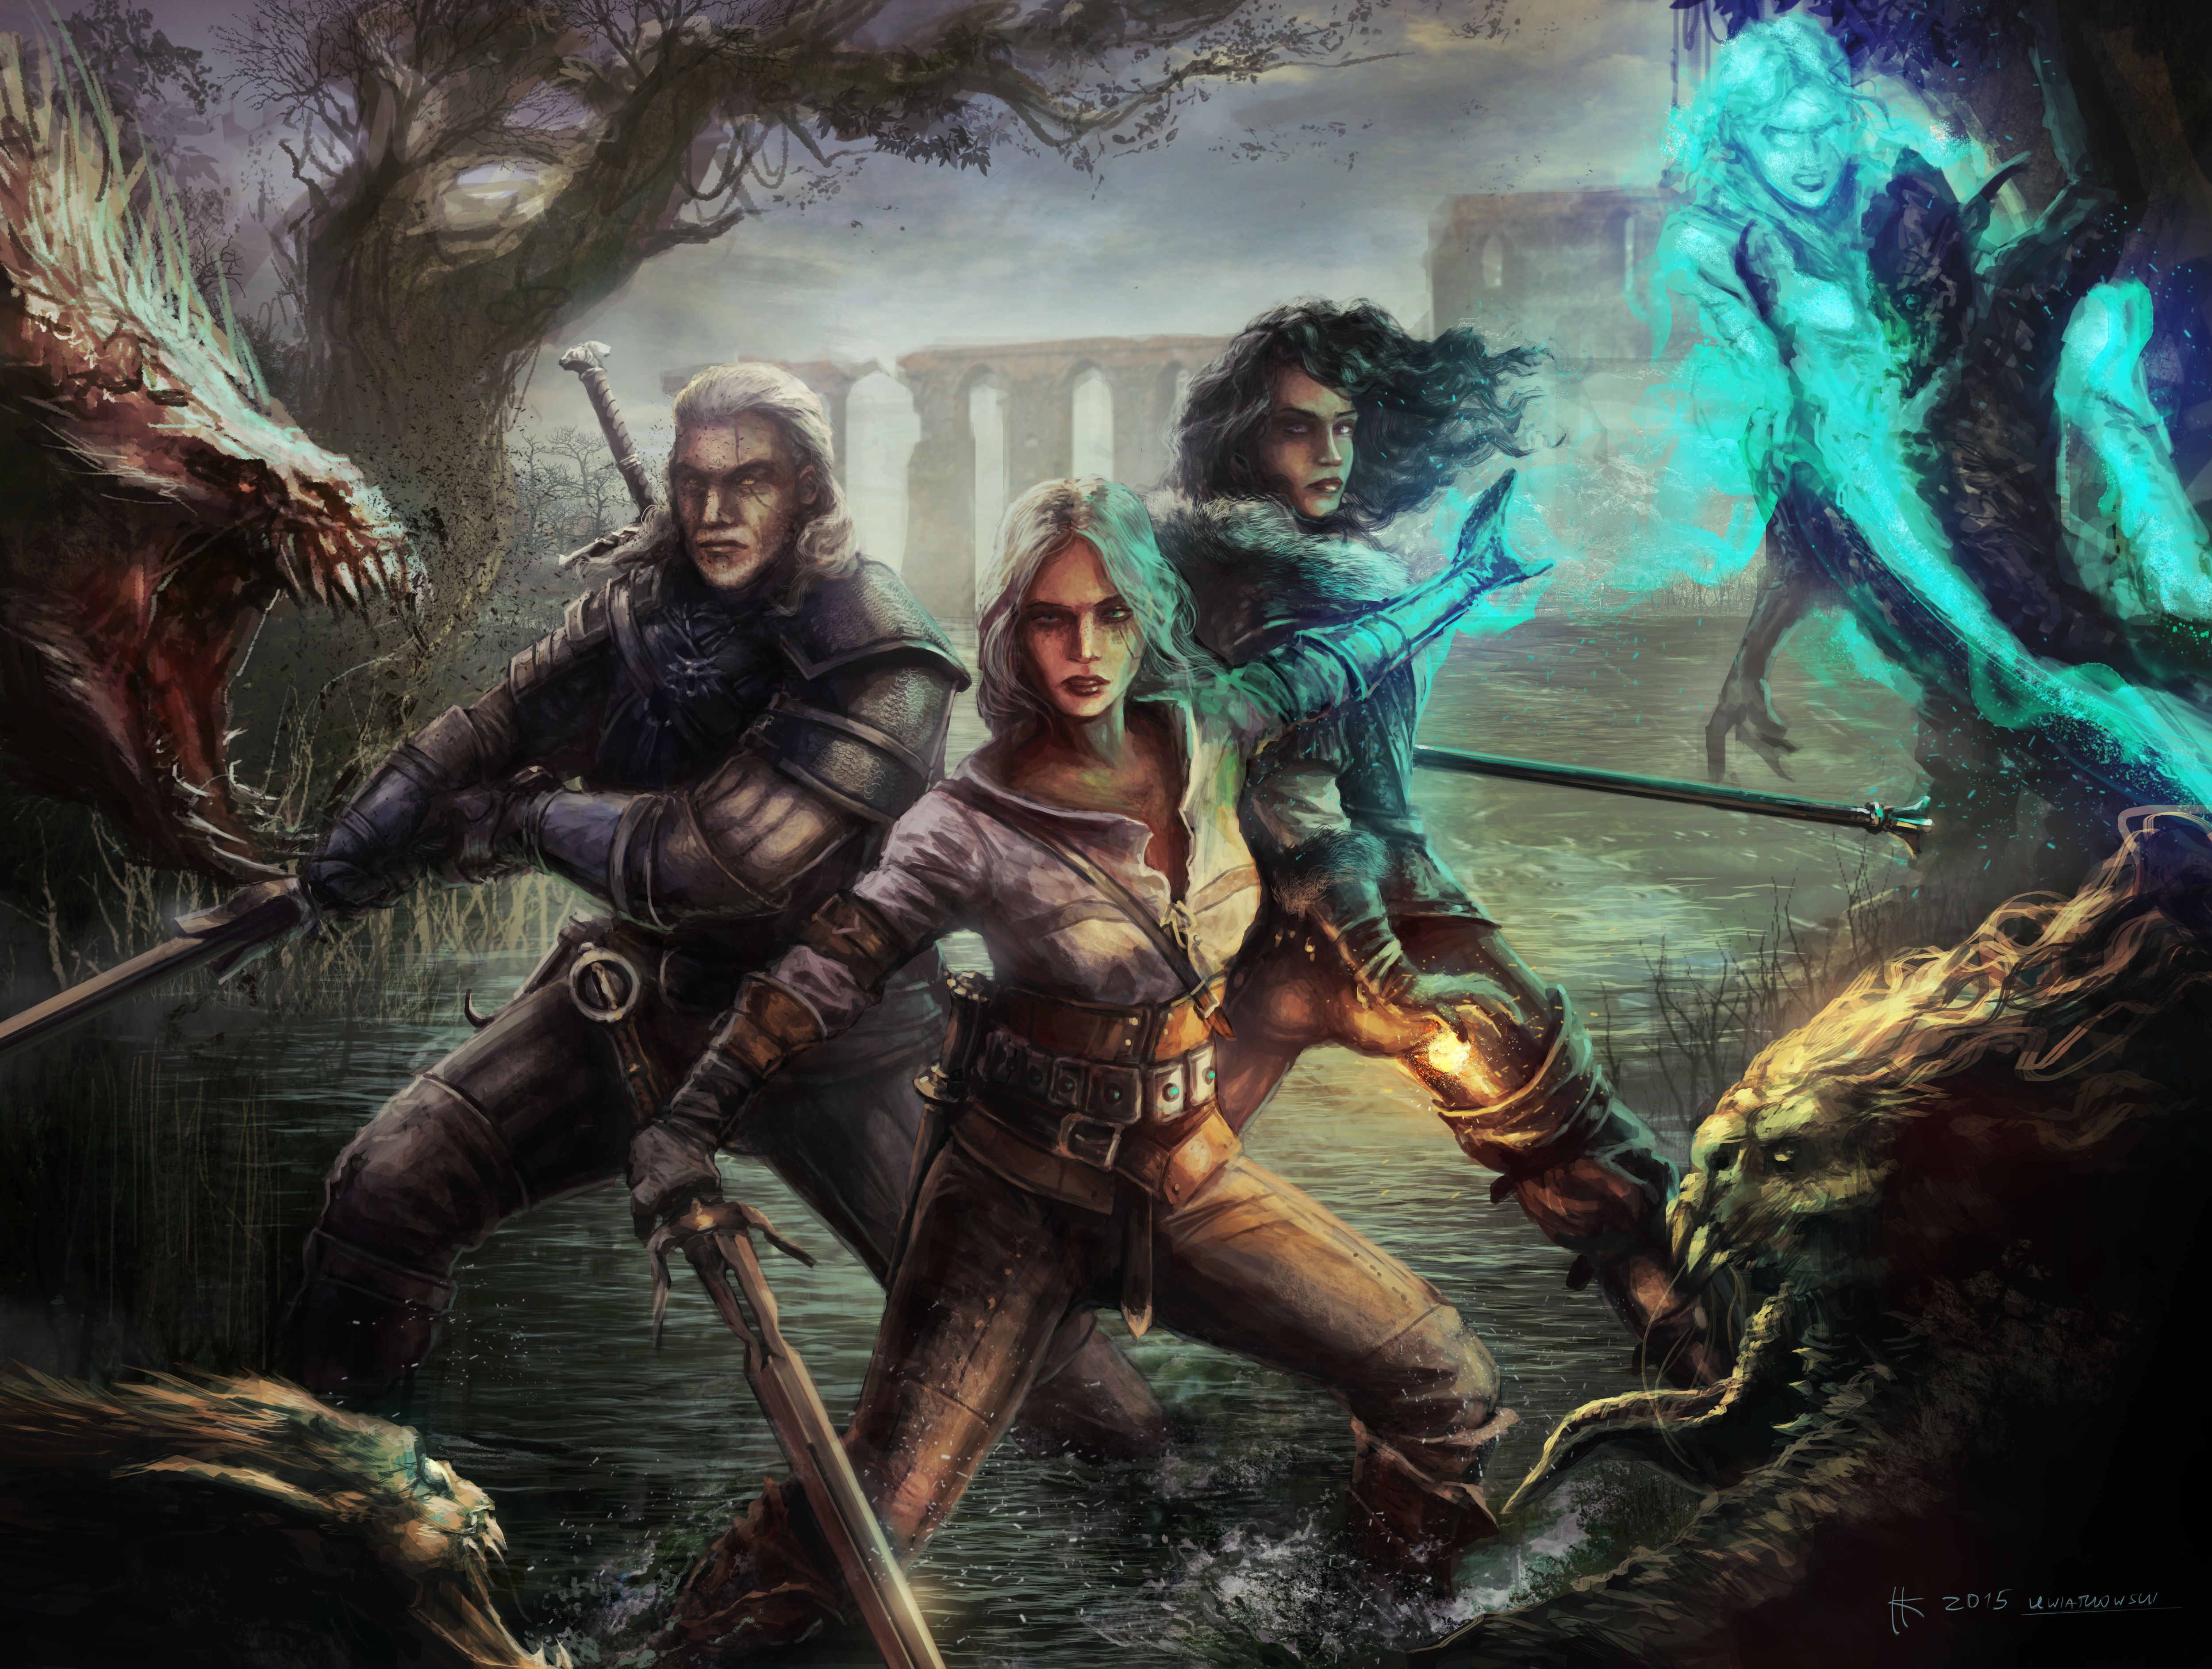 Wallpaper The Witcher 3 Wild Hunt Geralt of Rivia Ciri Darkness Arm  Background  Download Free Image